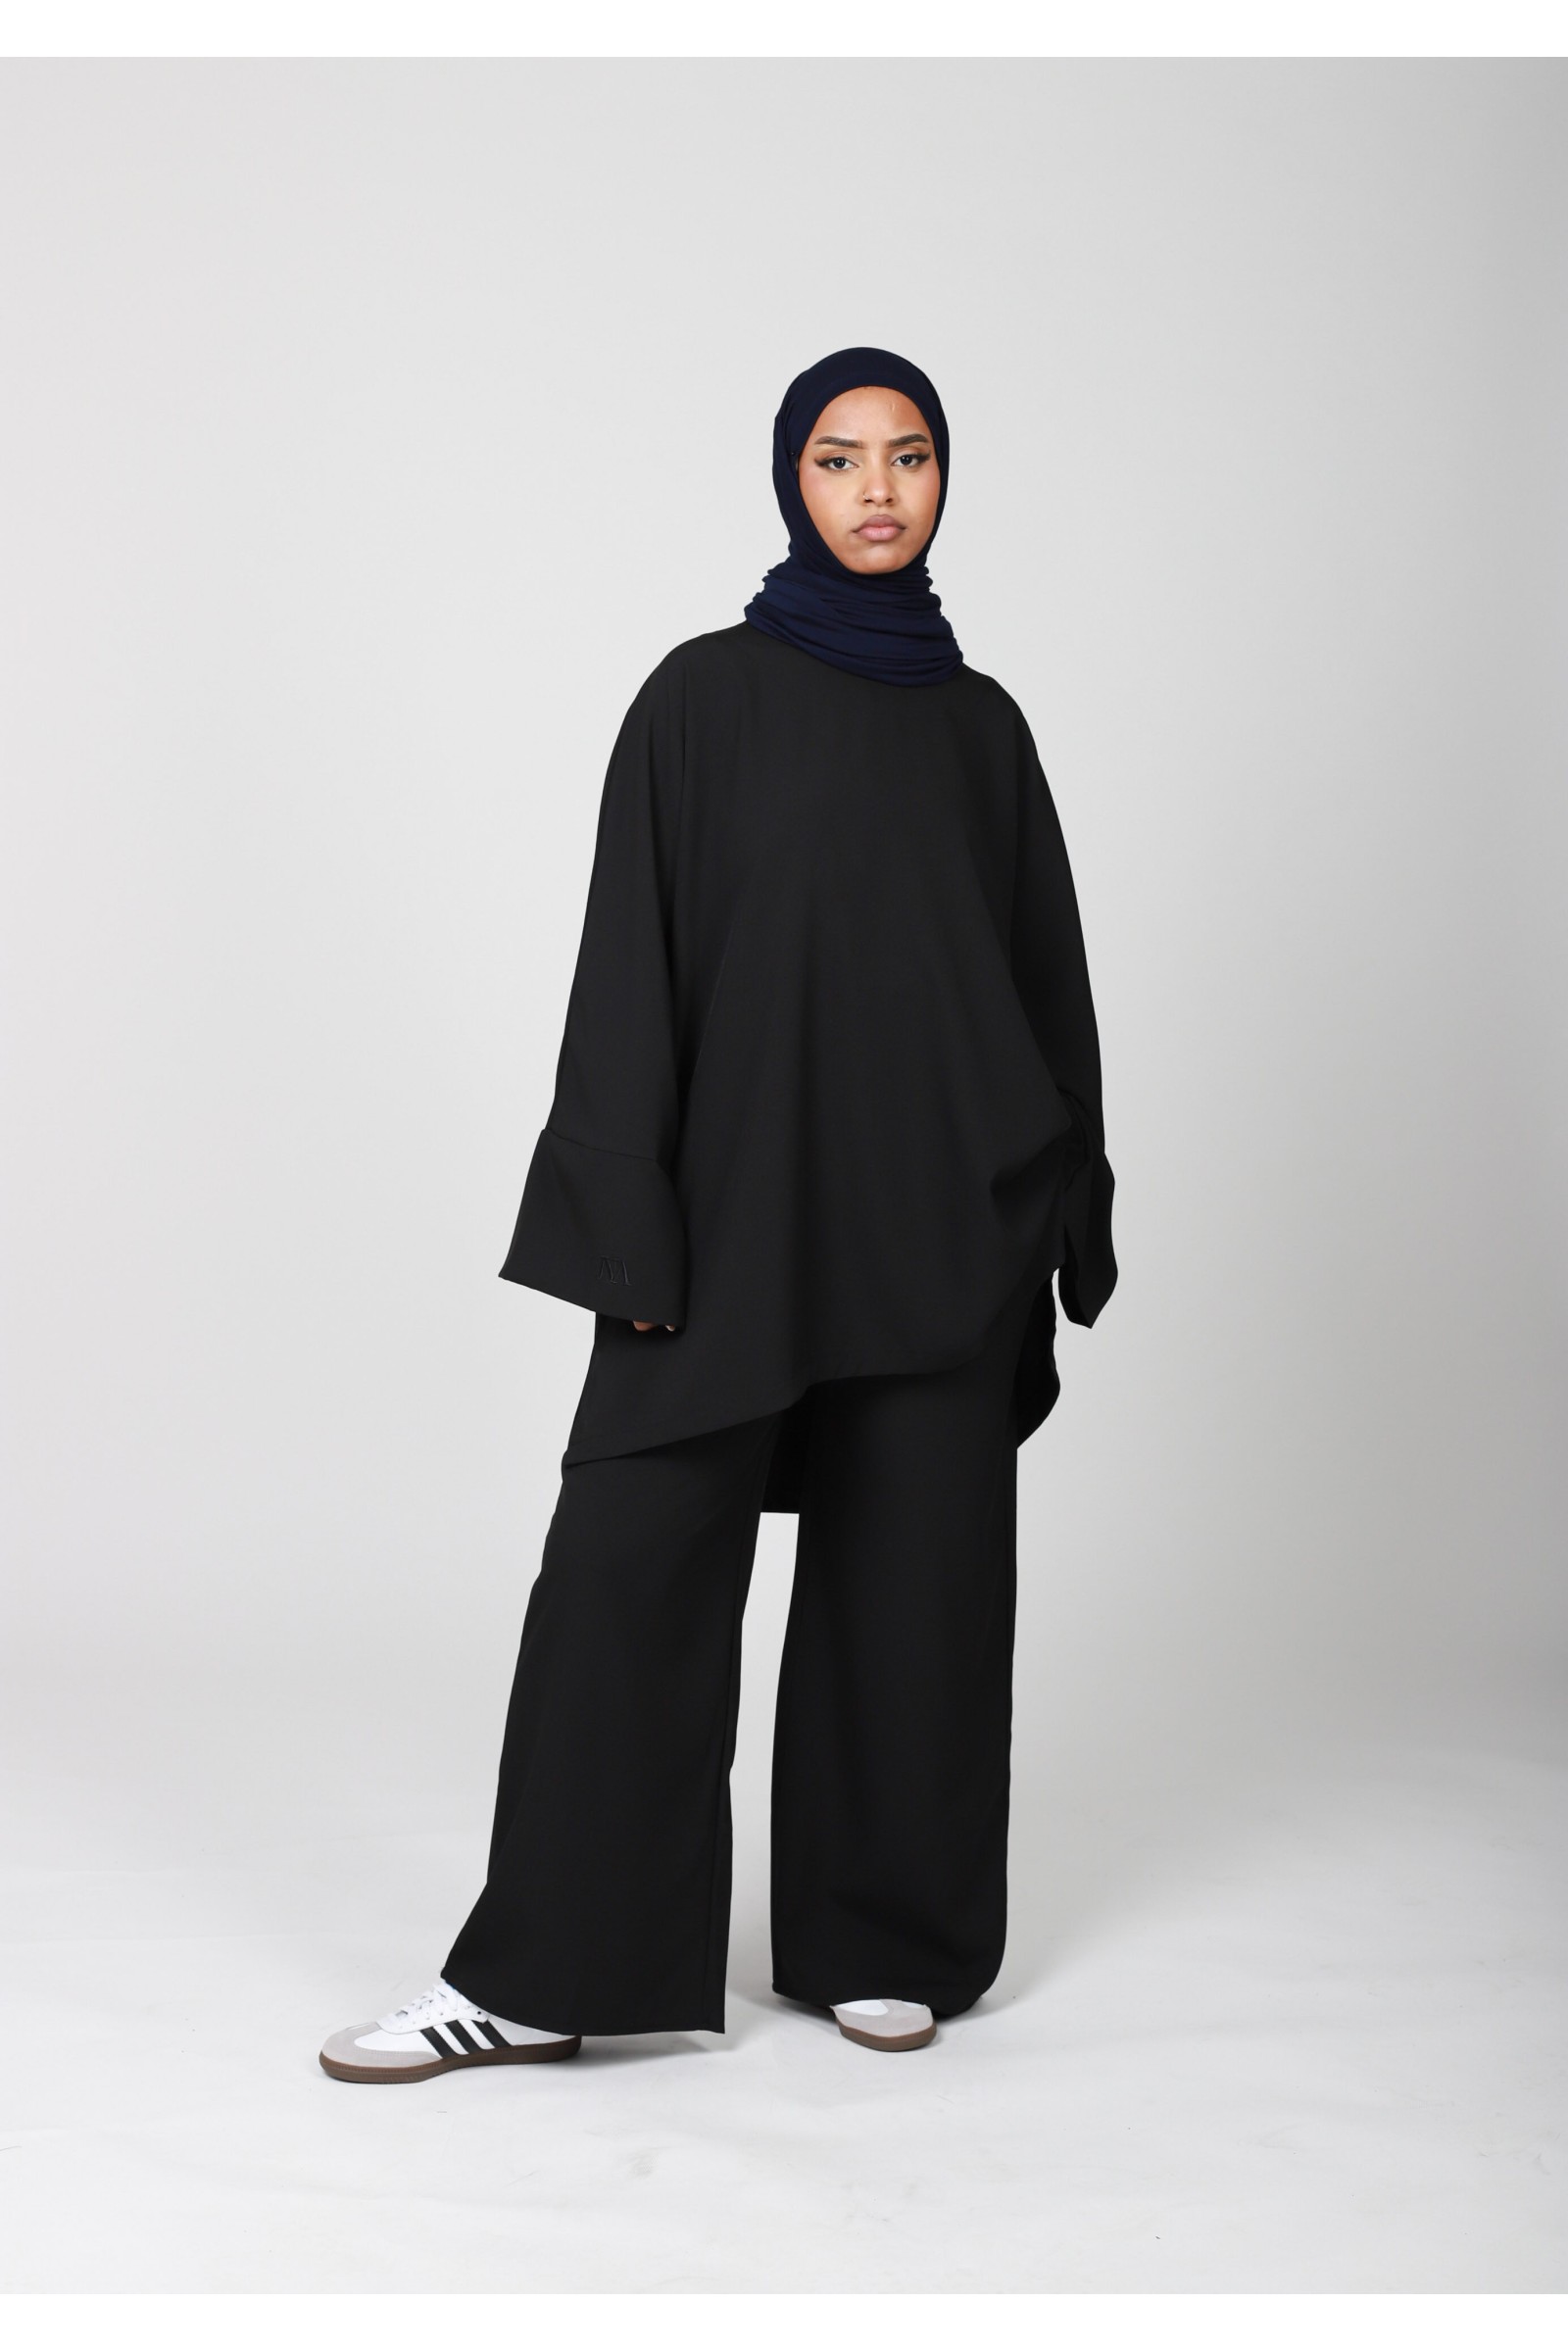 Ensemble pantalon modeste pour femmes musulmanes 2024